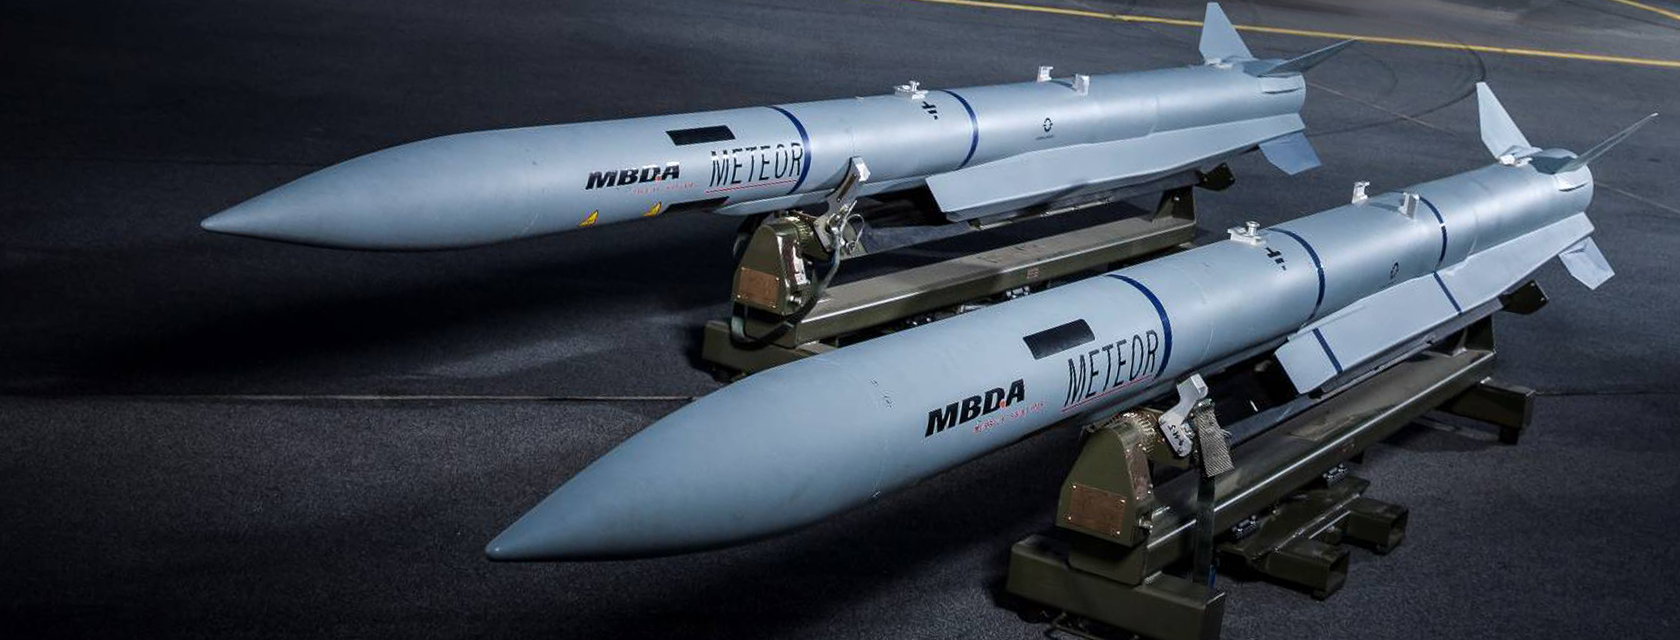 Meteor Missile | Plane-Encyclopedia